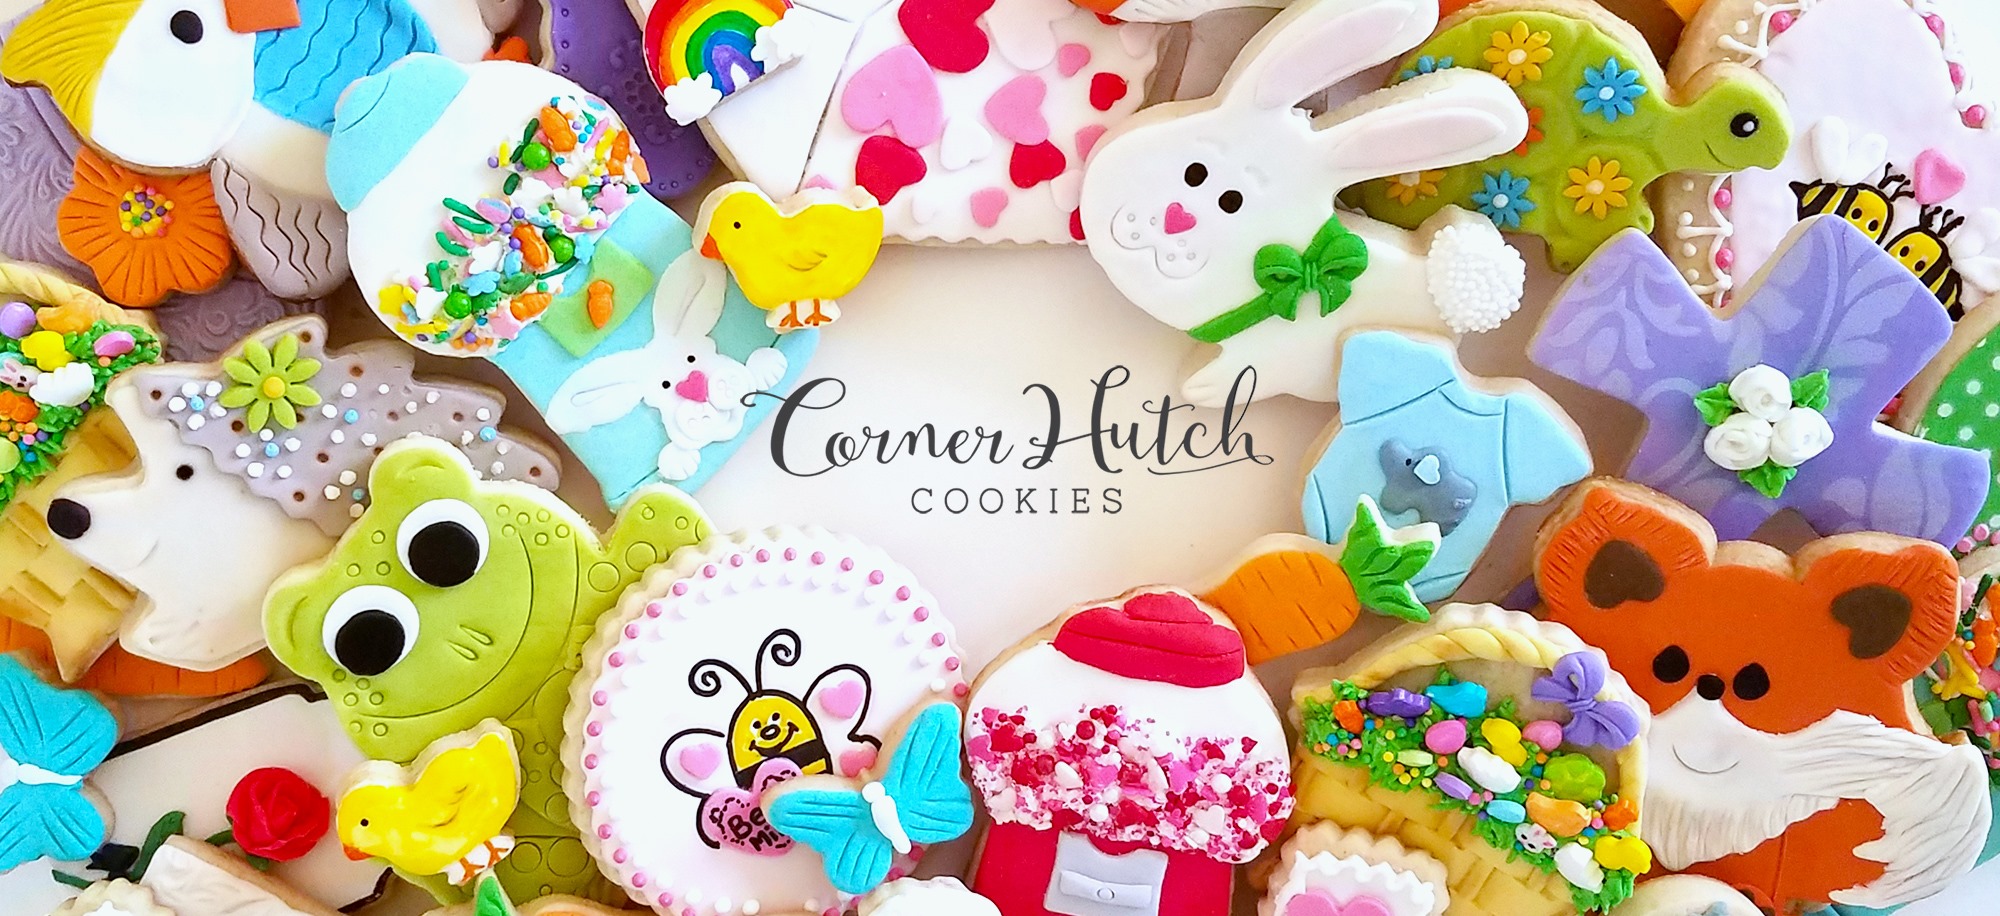 Corner Hutch Cookies LLC